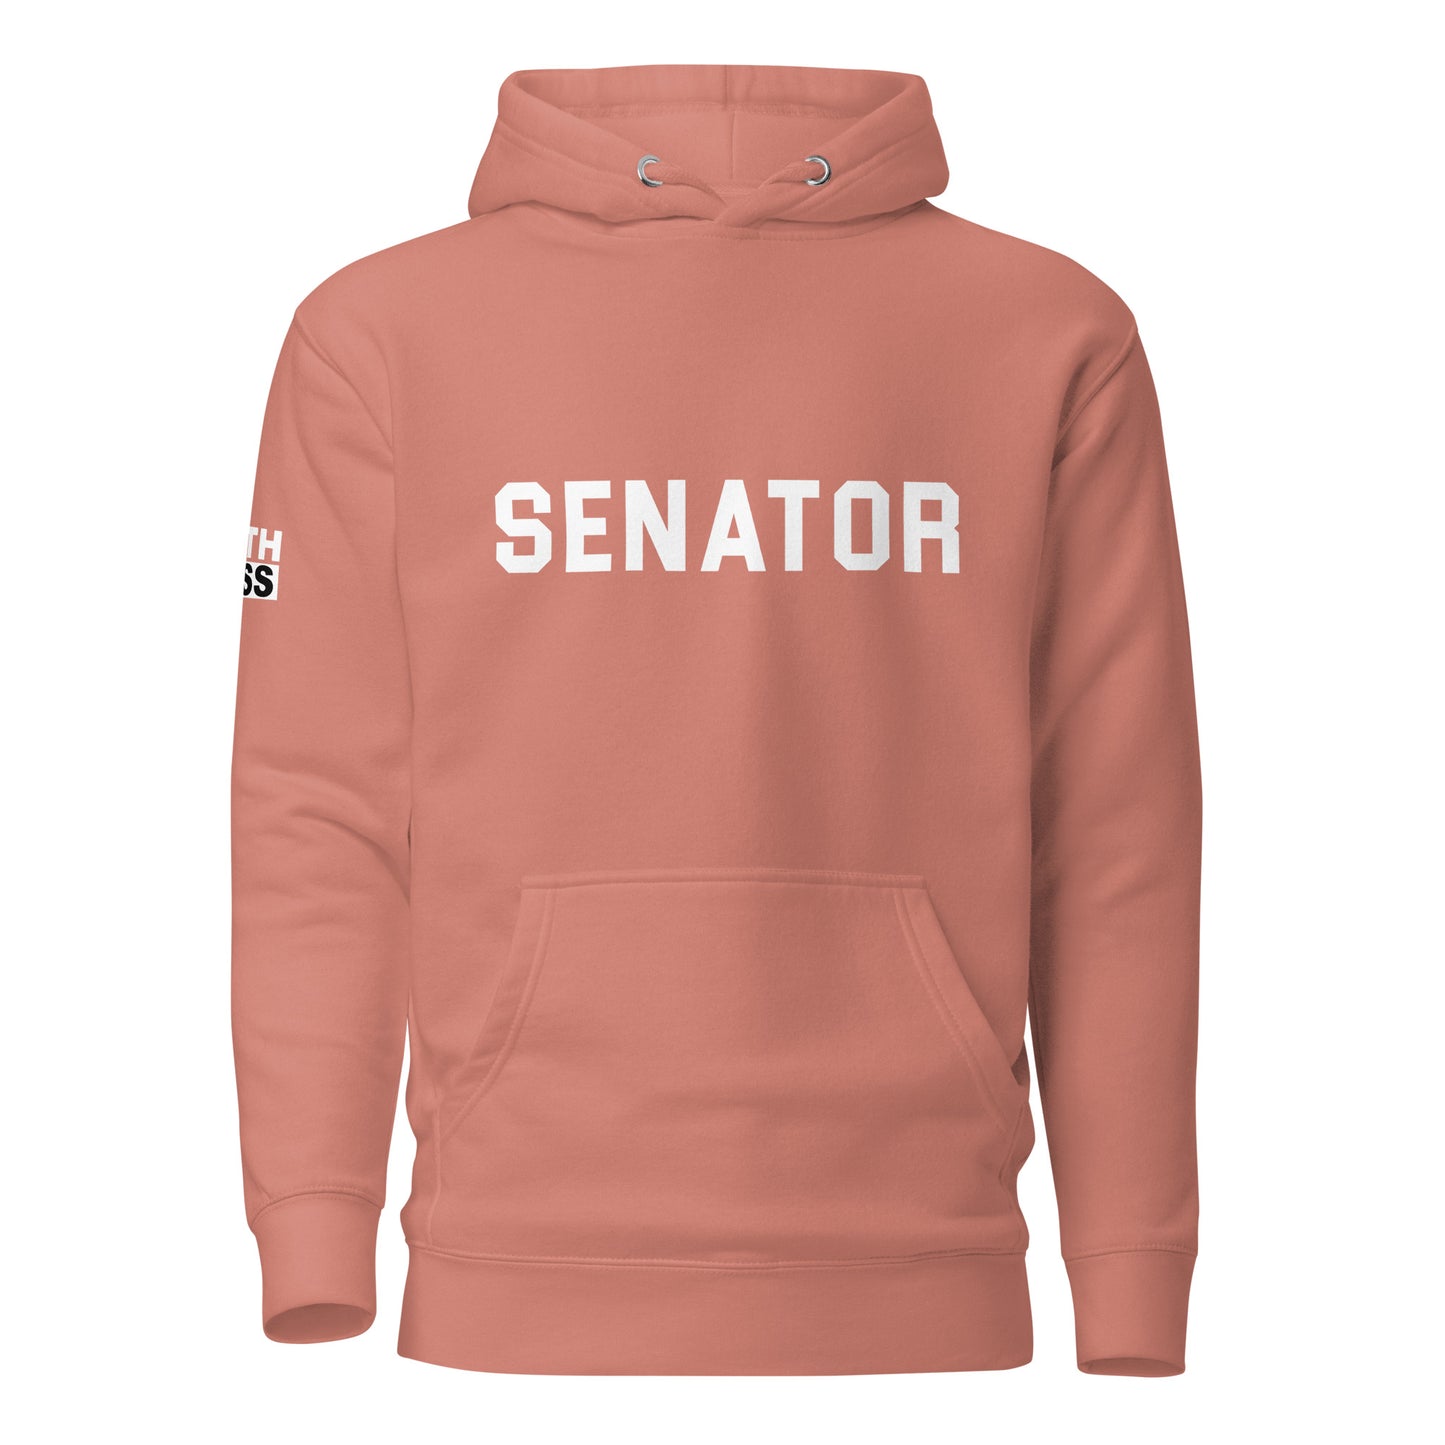 "Senator" U.S. Senate Uniform Hoodie